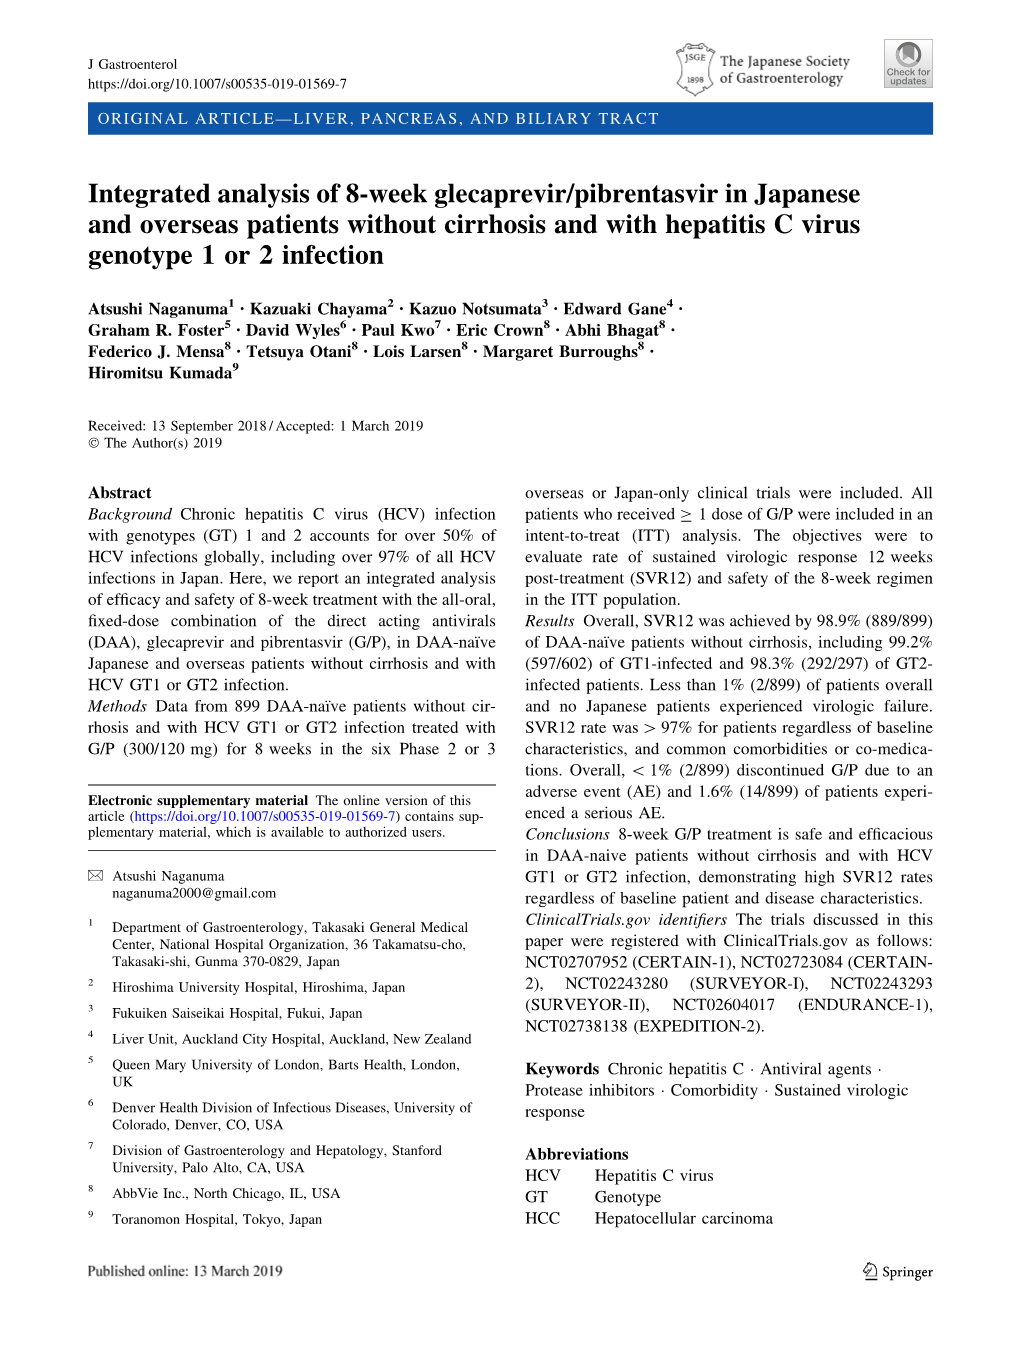 Integrated Analysis of 8-Week Glecaprevir/Pibrentasvir in Japanese and Overseas Patients Without Cirrhosis and with Hepatitis C Virus Genotype 1 Or 2 Infection